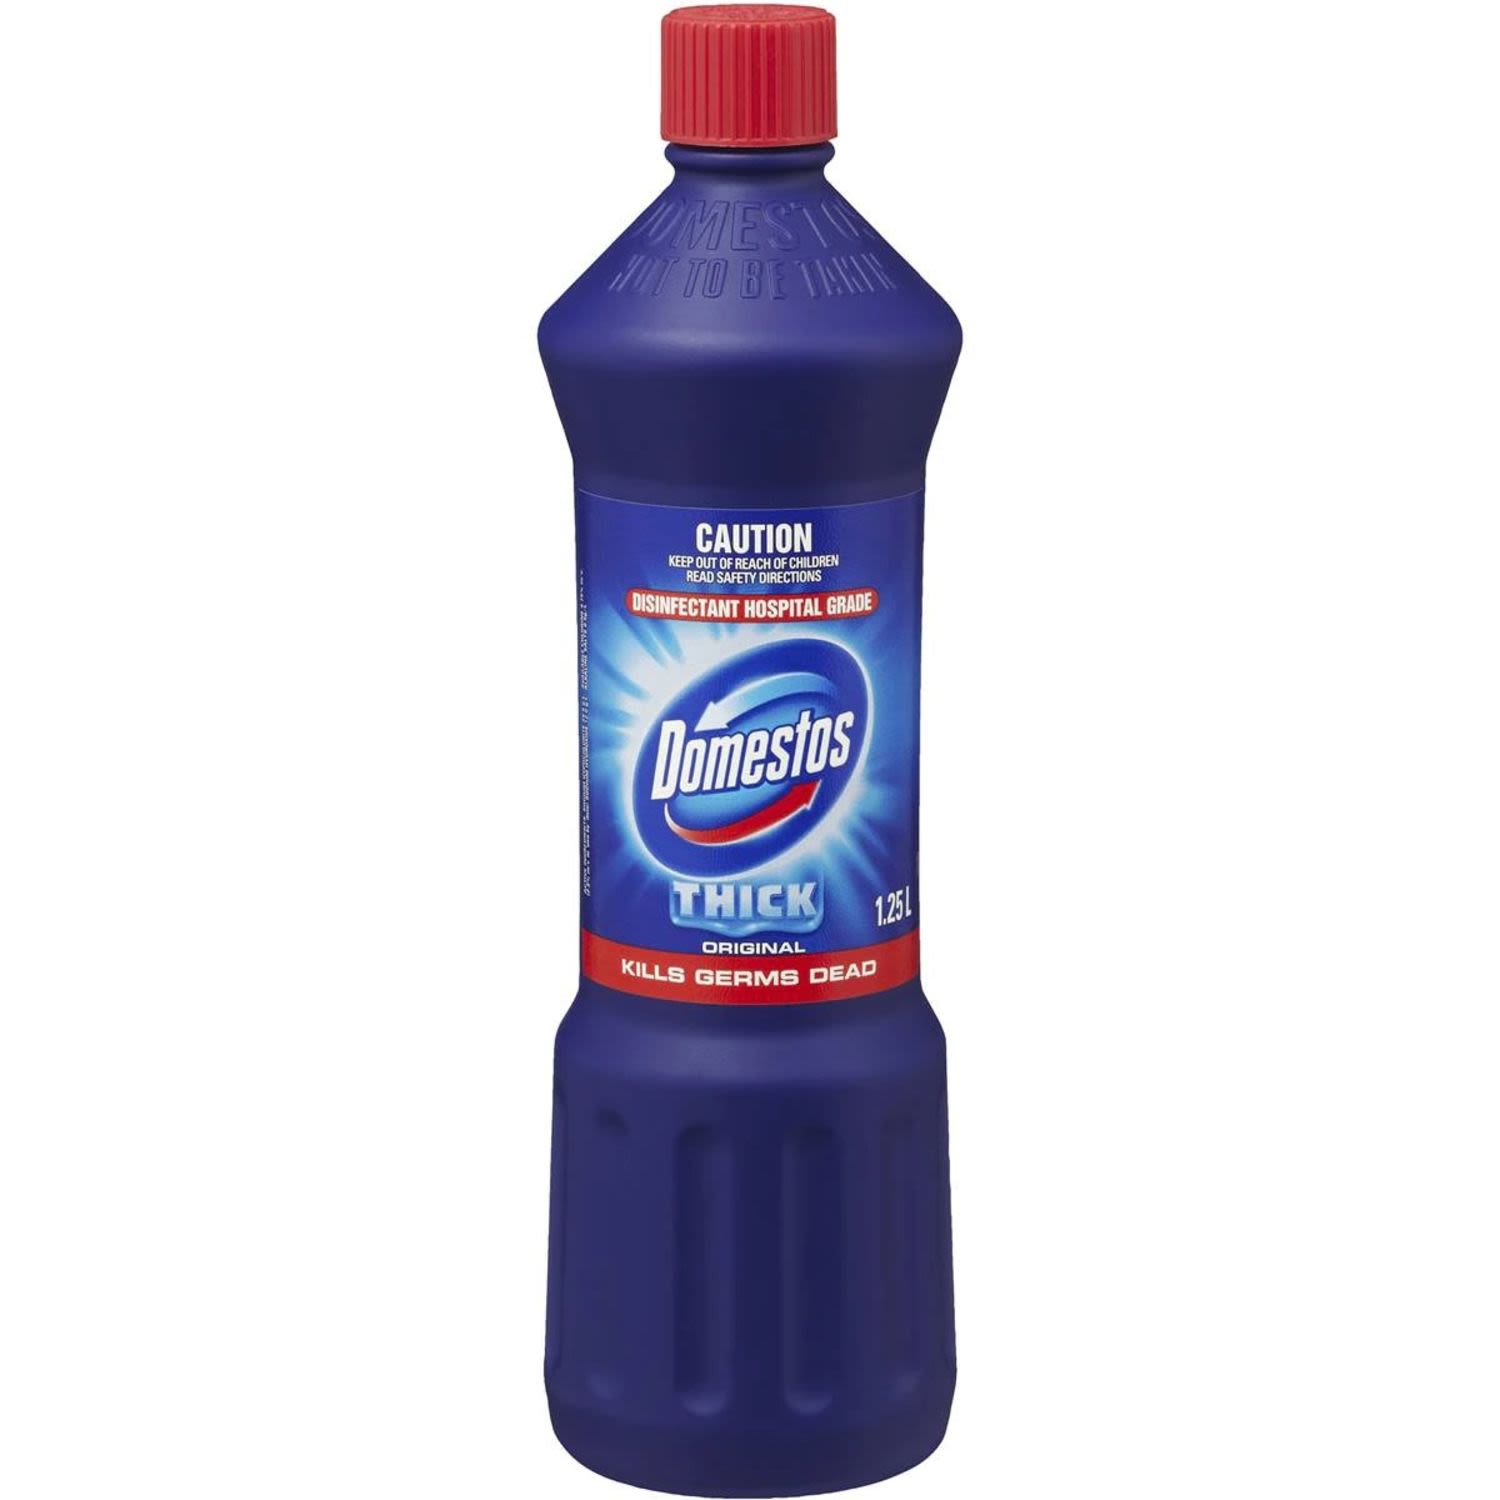 Domestos Bleach Disinfectant Cleaner Regular, 1.25 Litre